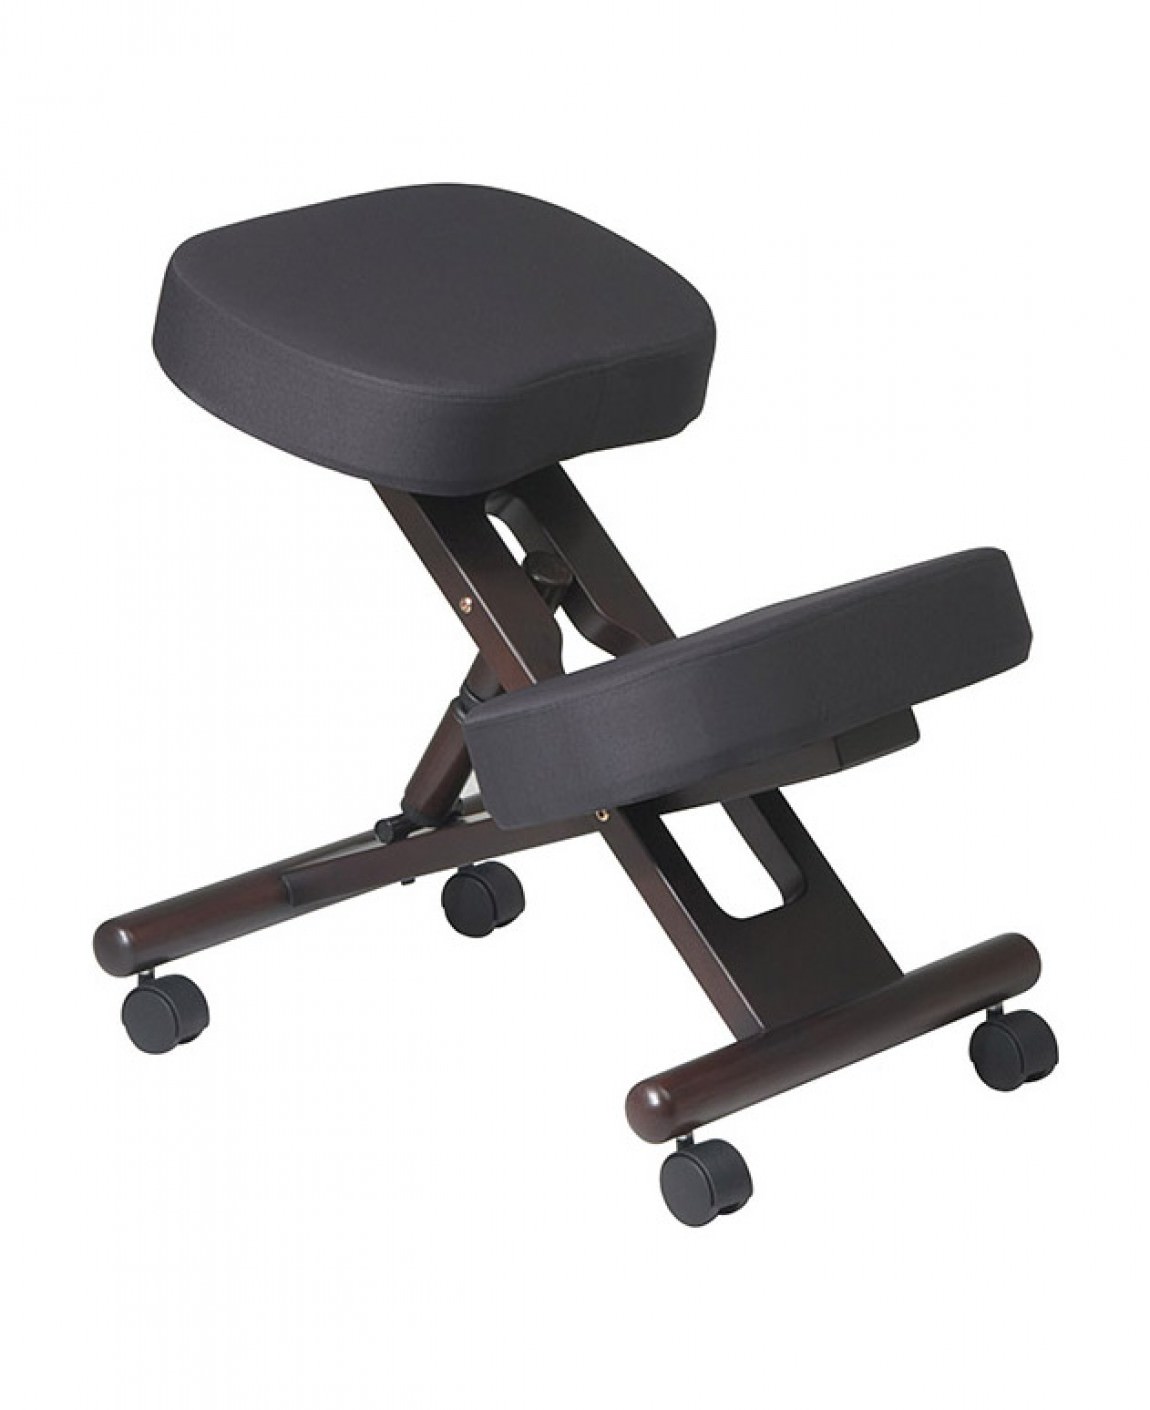 https://madisonliquidators.com/images/p/1150/24926-ergonomic-kneeling-chair-1.jpg